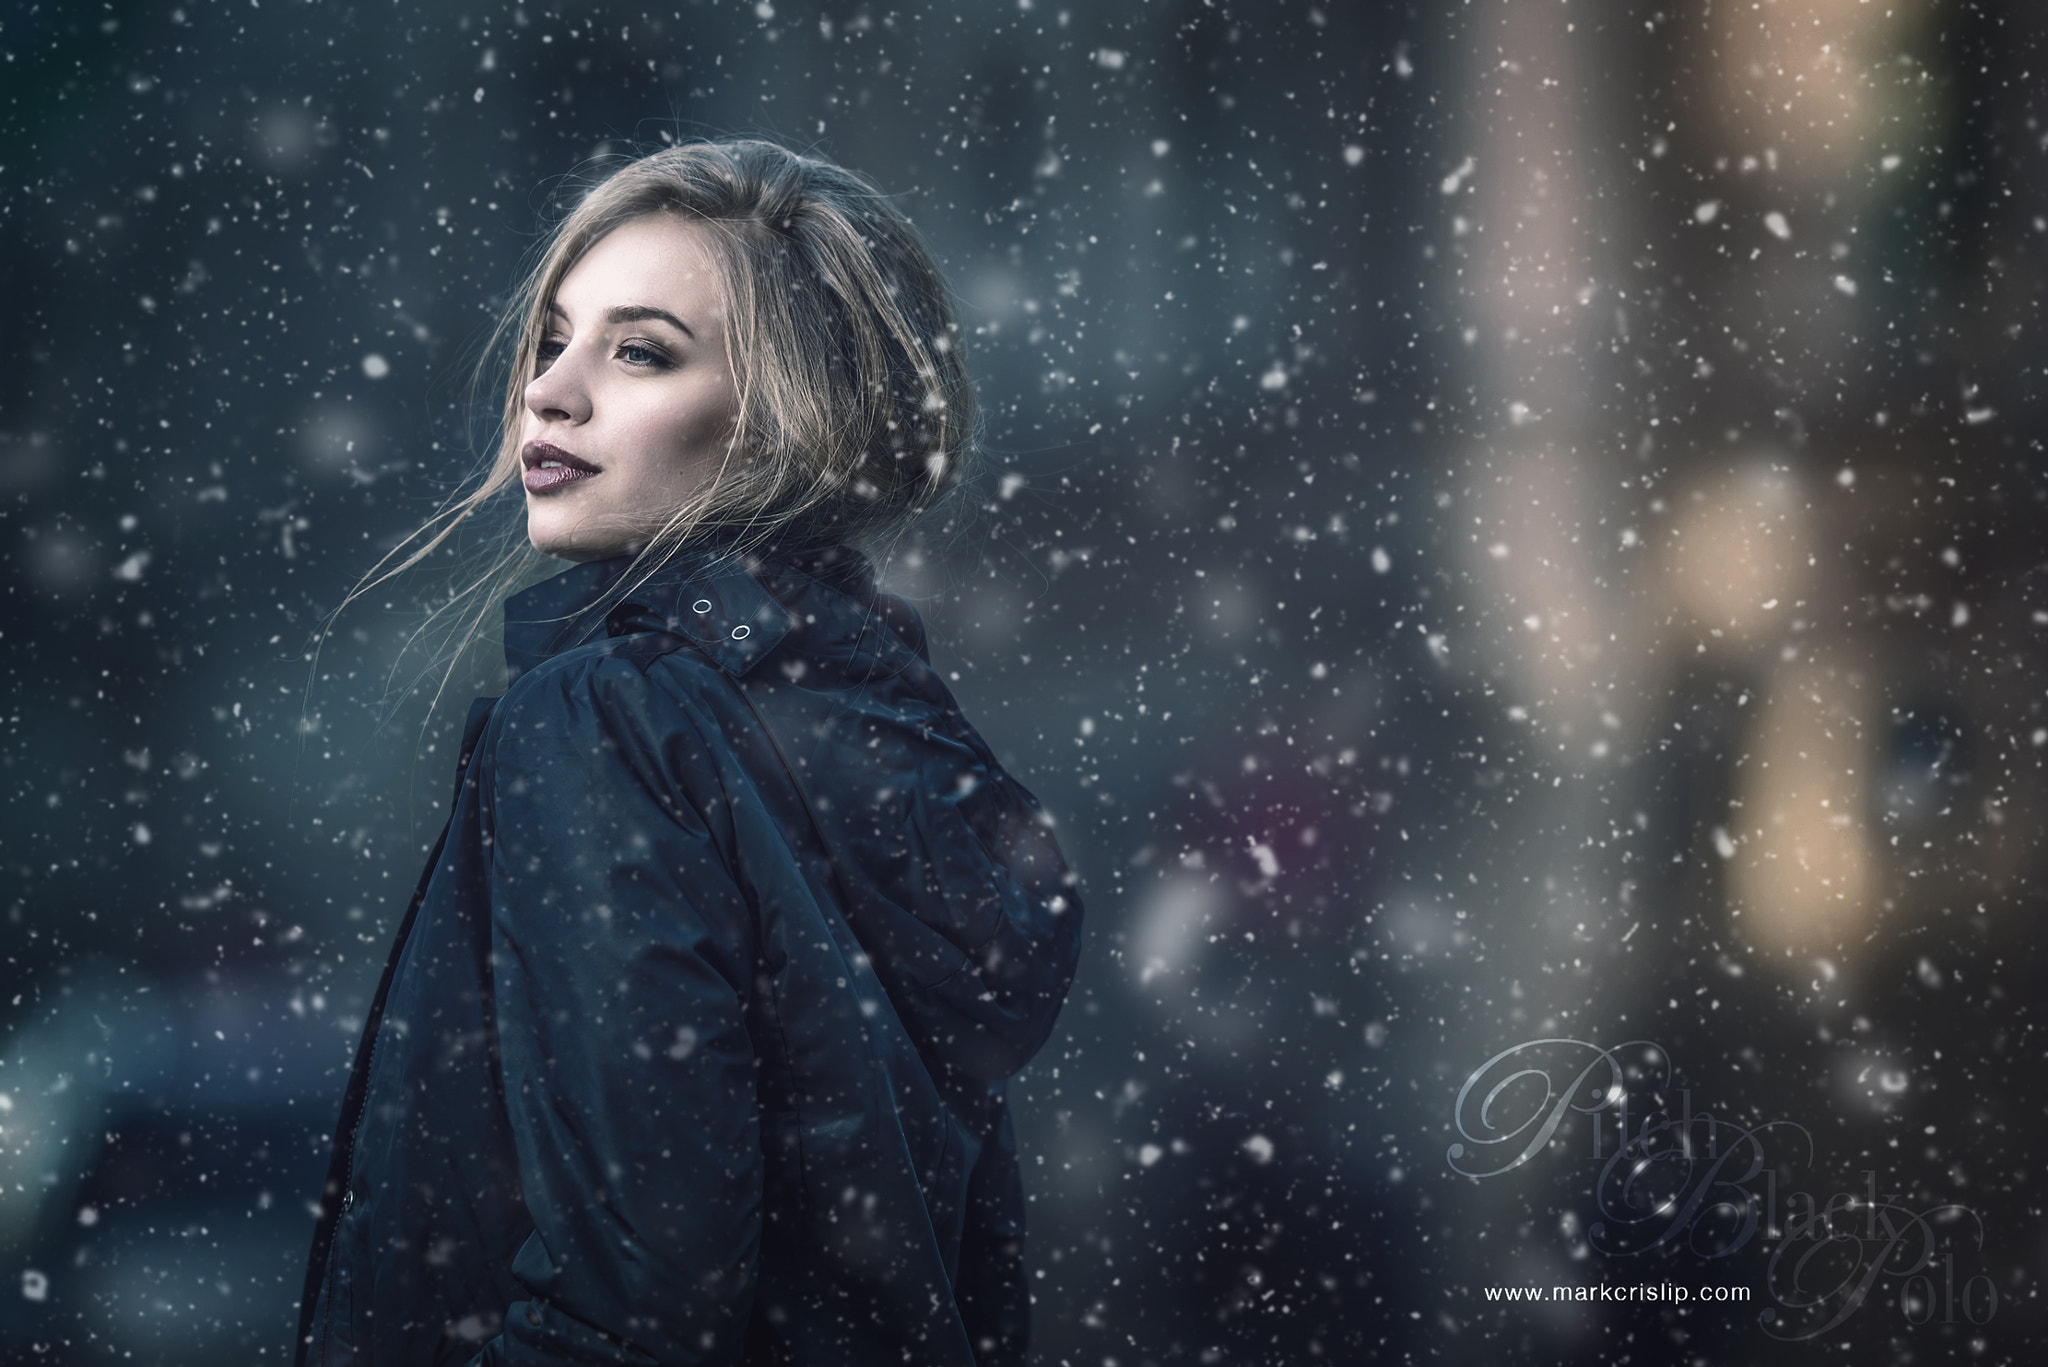 Women Mark Crislip Blonde Jacket Snowflakes Snow Open Mouth Red Lipstick Black Coat Coats 2048x1367